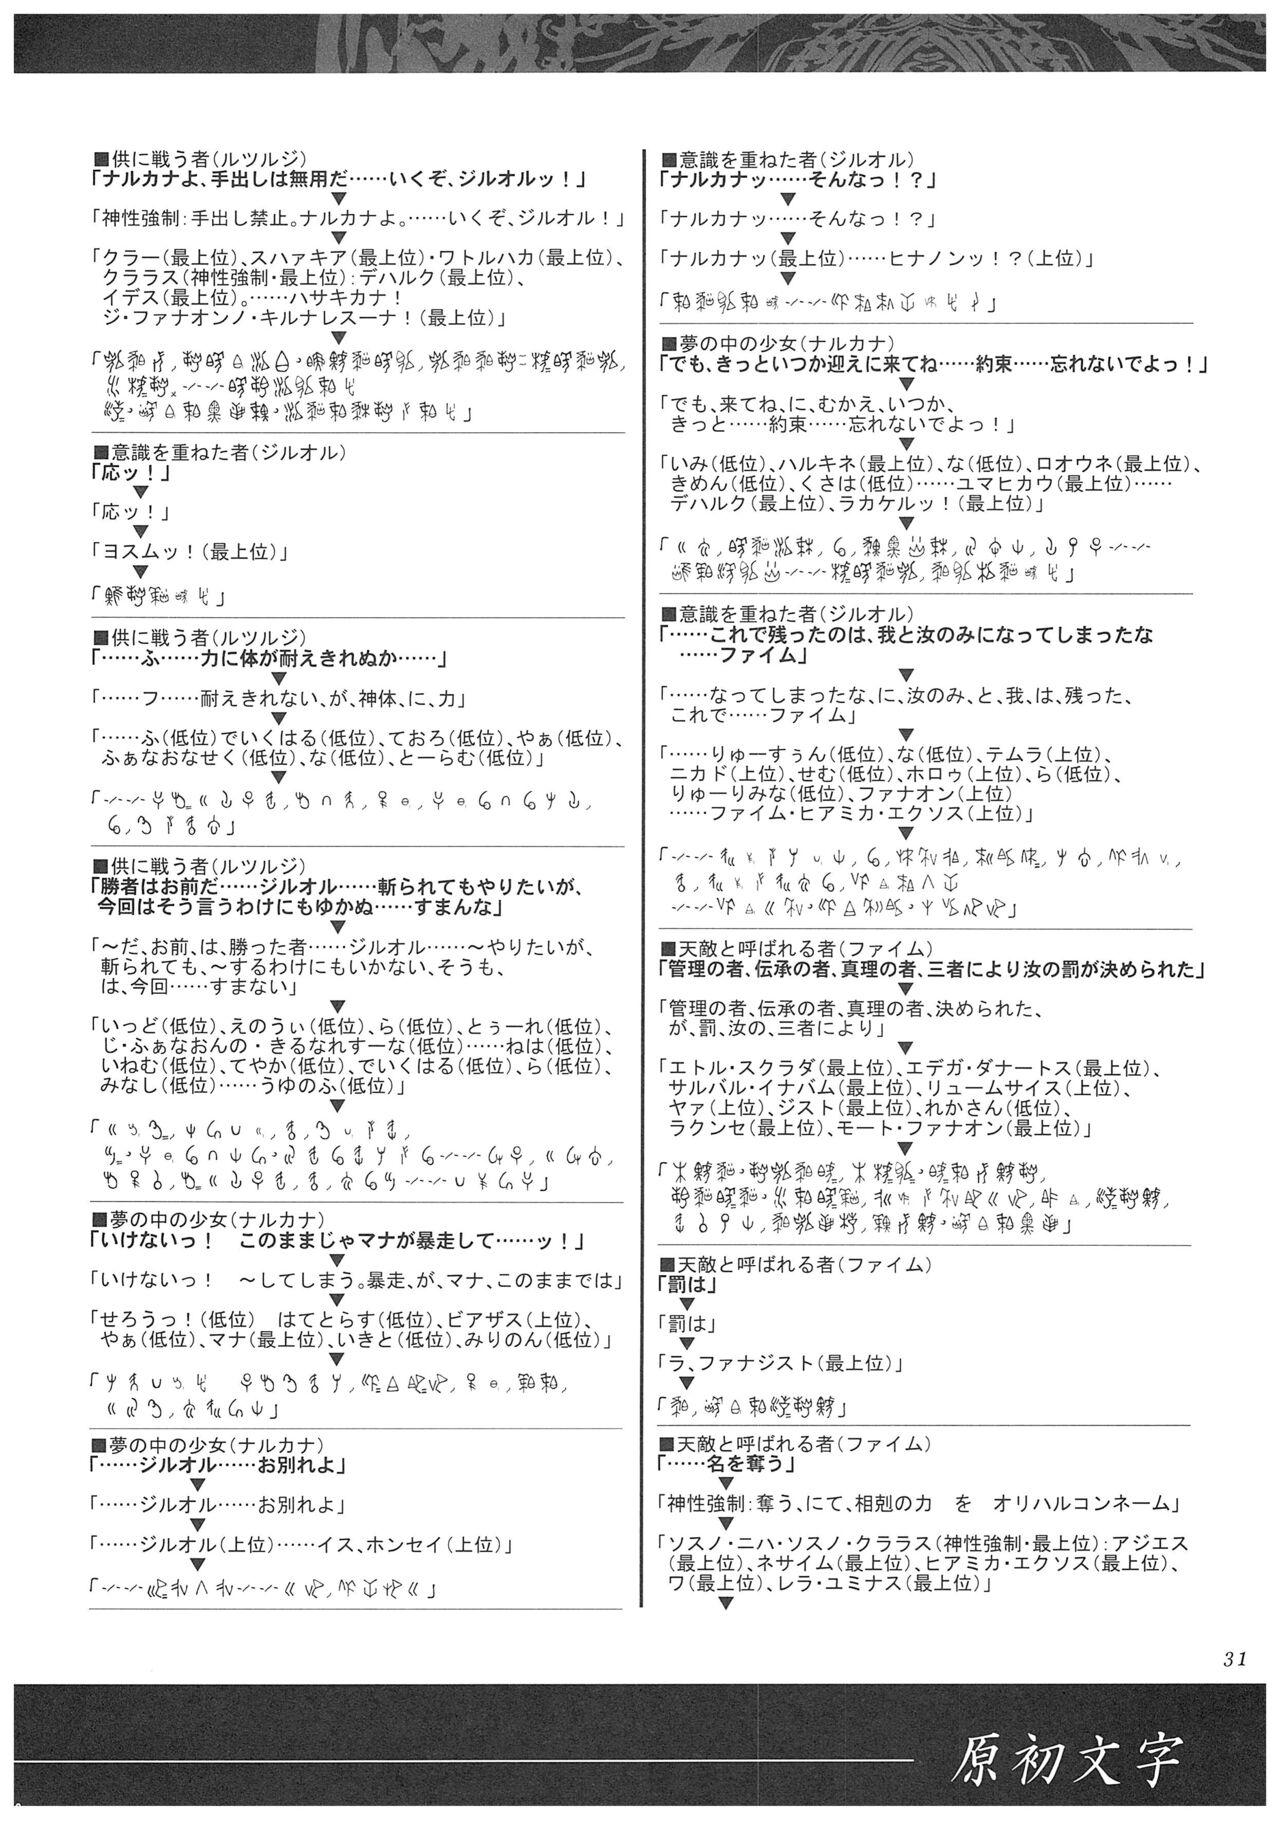 Seinarukana - offical ArtBook 110